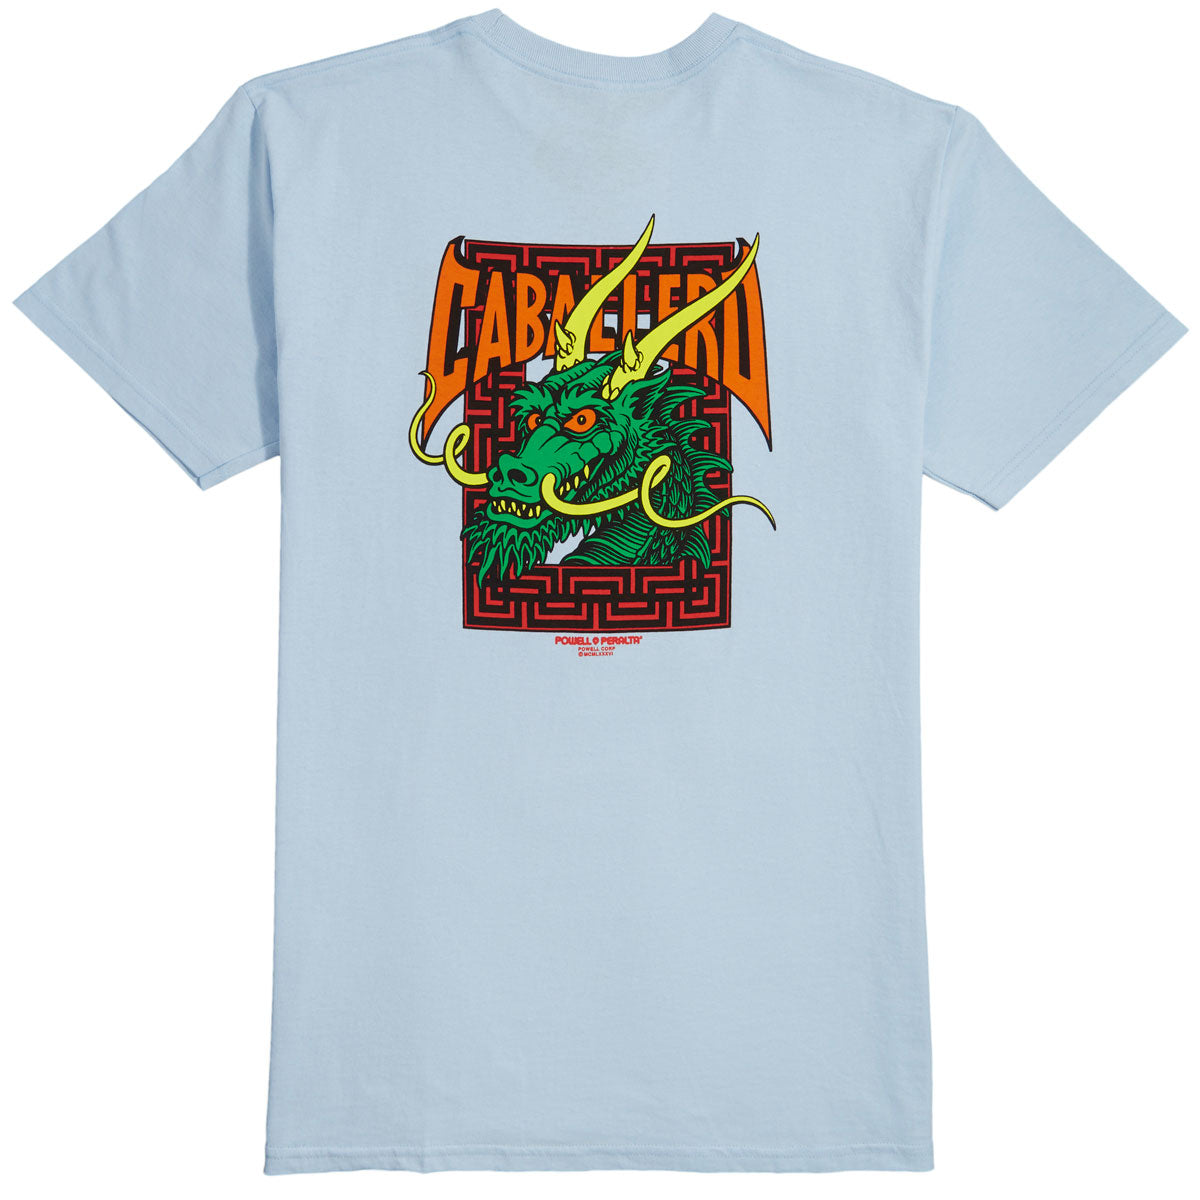 Powell-Peralta Caballero Street Dragon T-Shirt - Powder Blue image 1